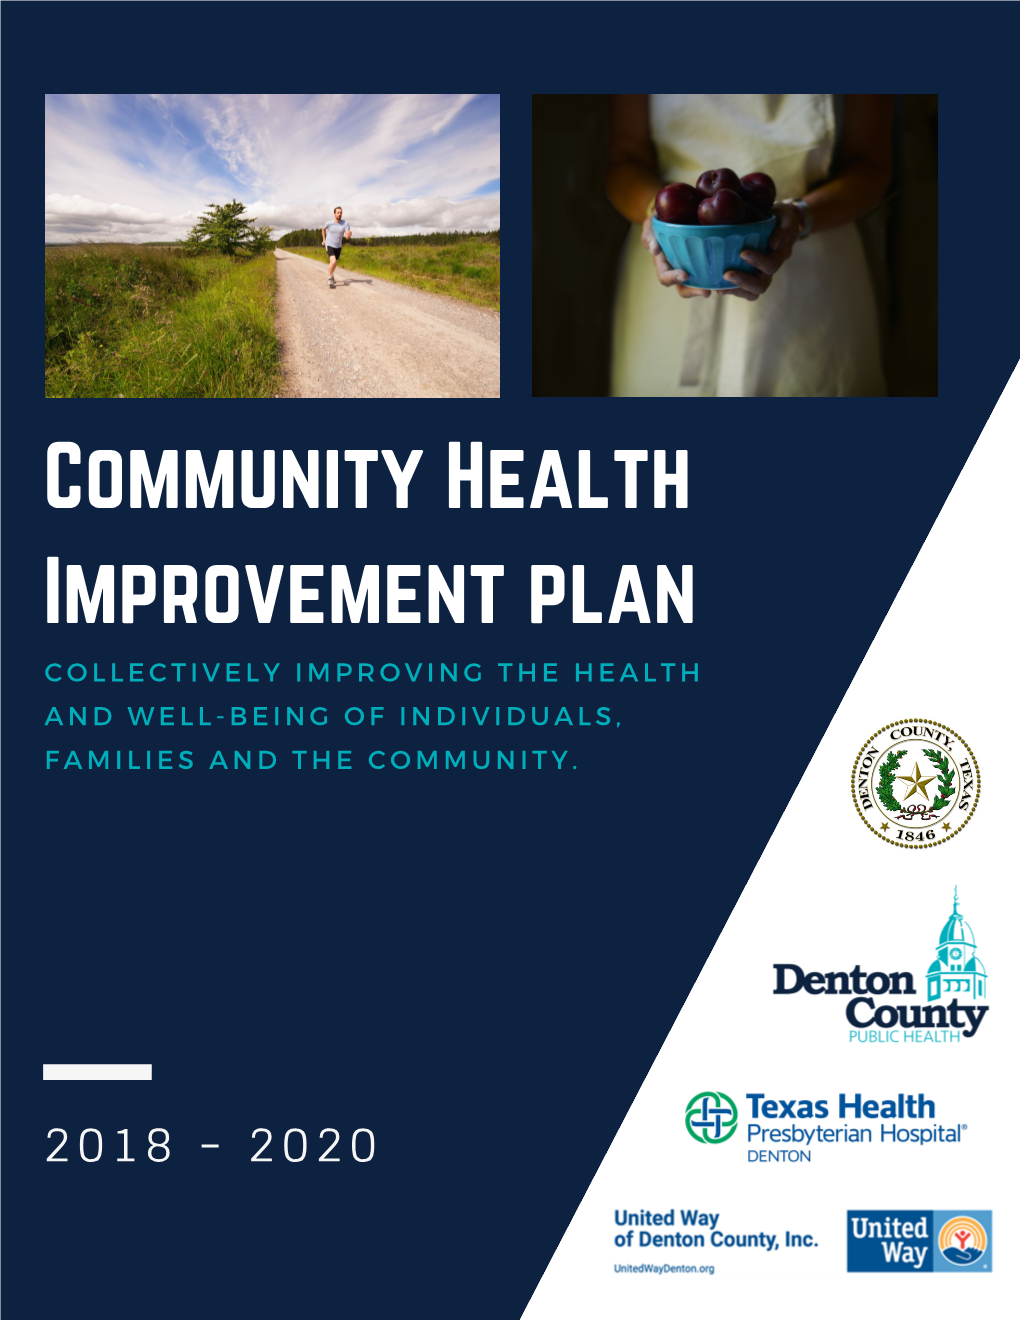 2018 to 2020 Community Health Improvement Plan